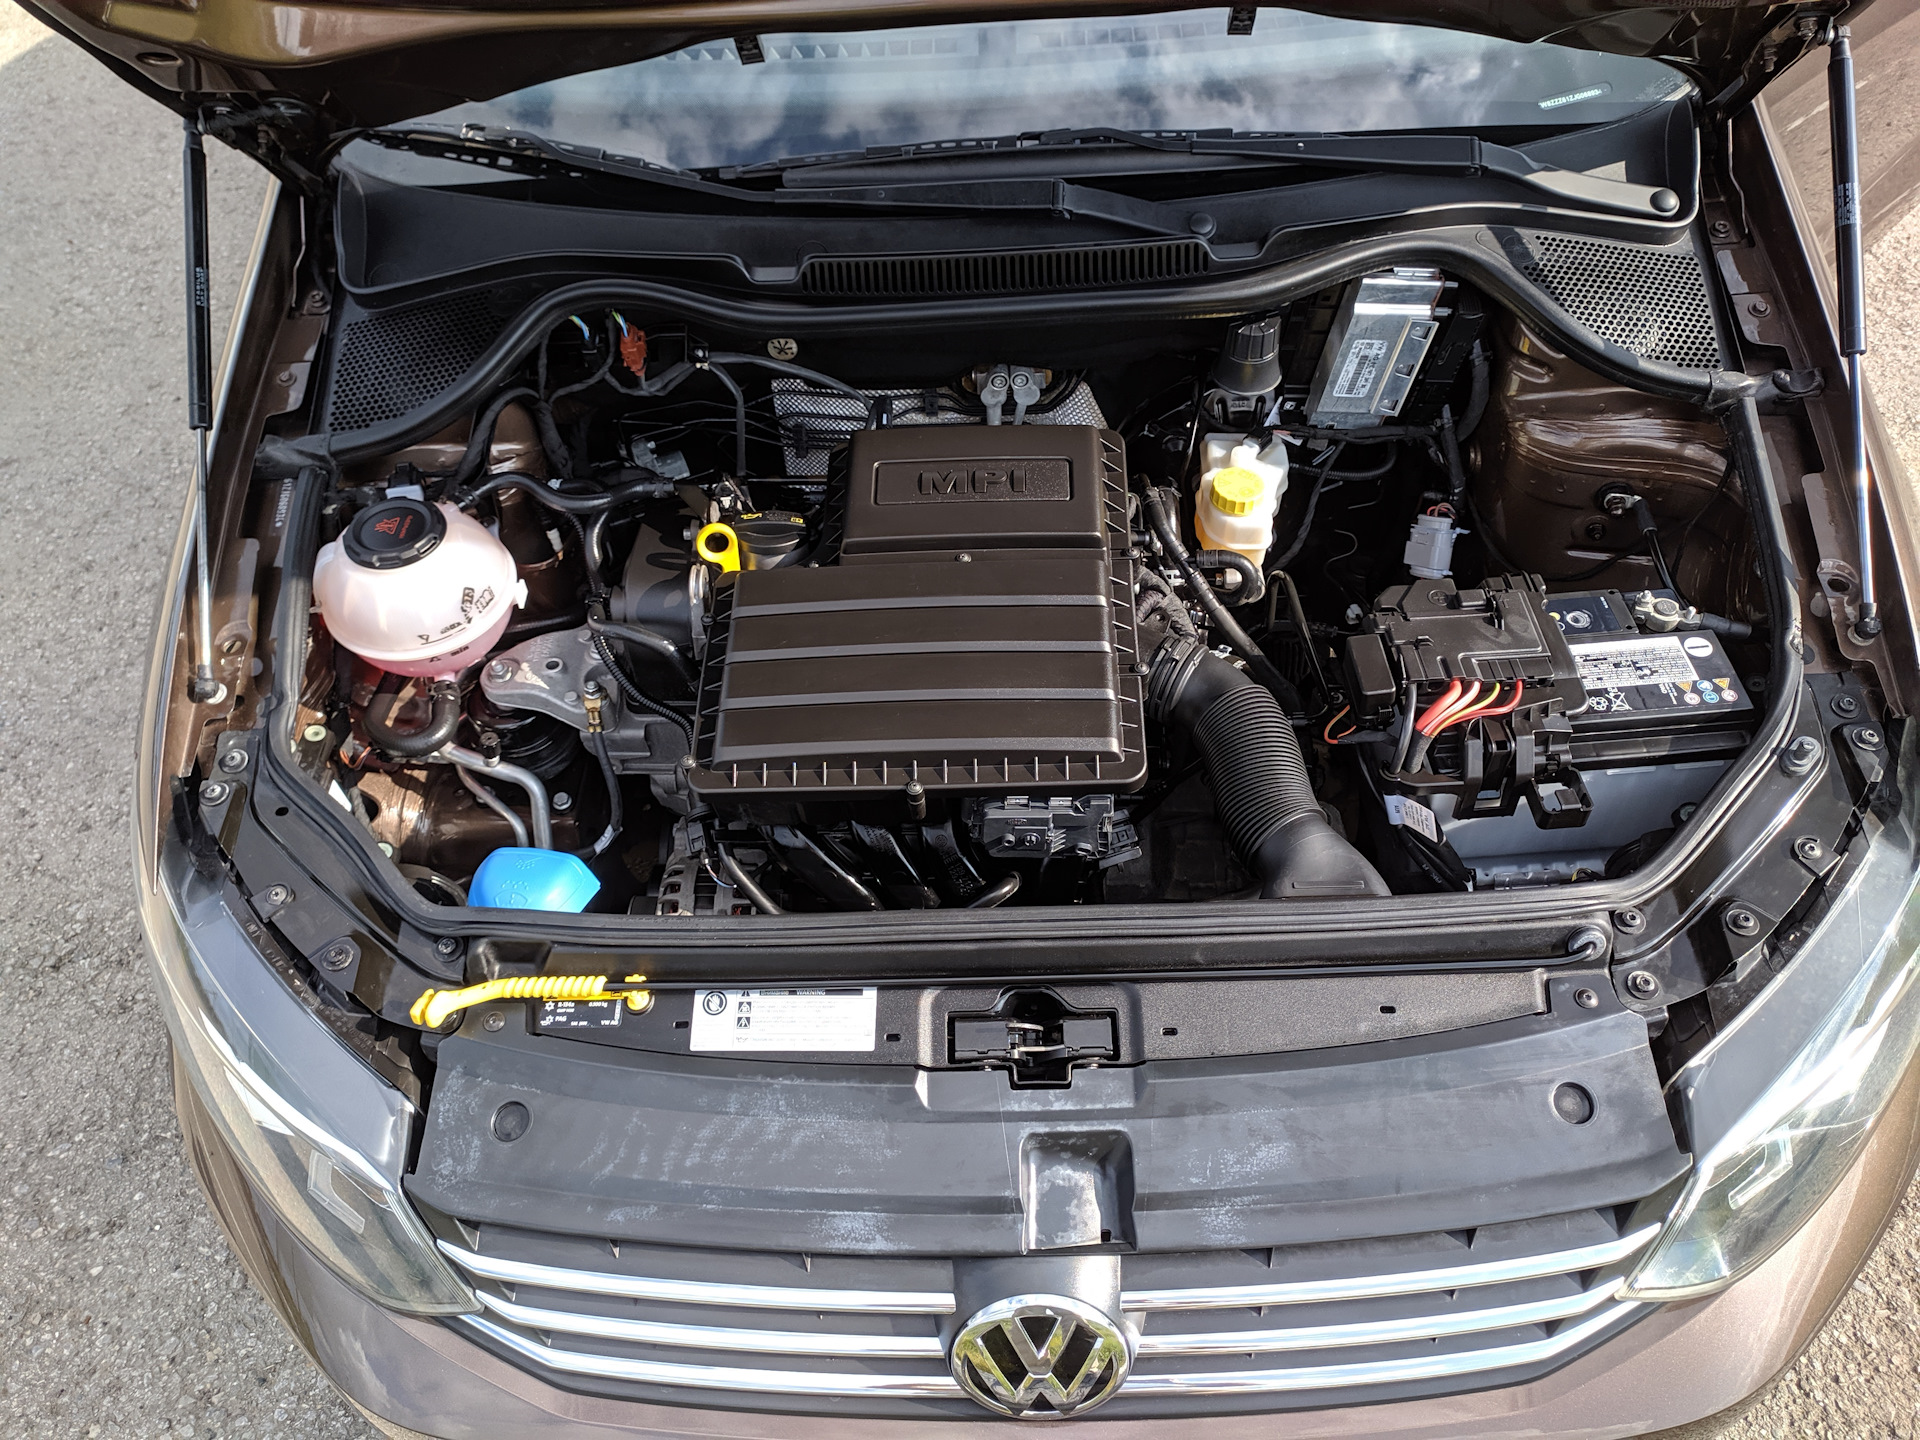 Volkswagen polo мотор. Volkswagen Polo sedan под капотом. Фольксваген поло 2017 под капотом. Двигатель Фольксваген поло седан 1.6 2014. Под капотом поло седан 2013.